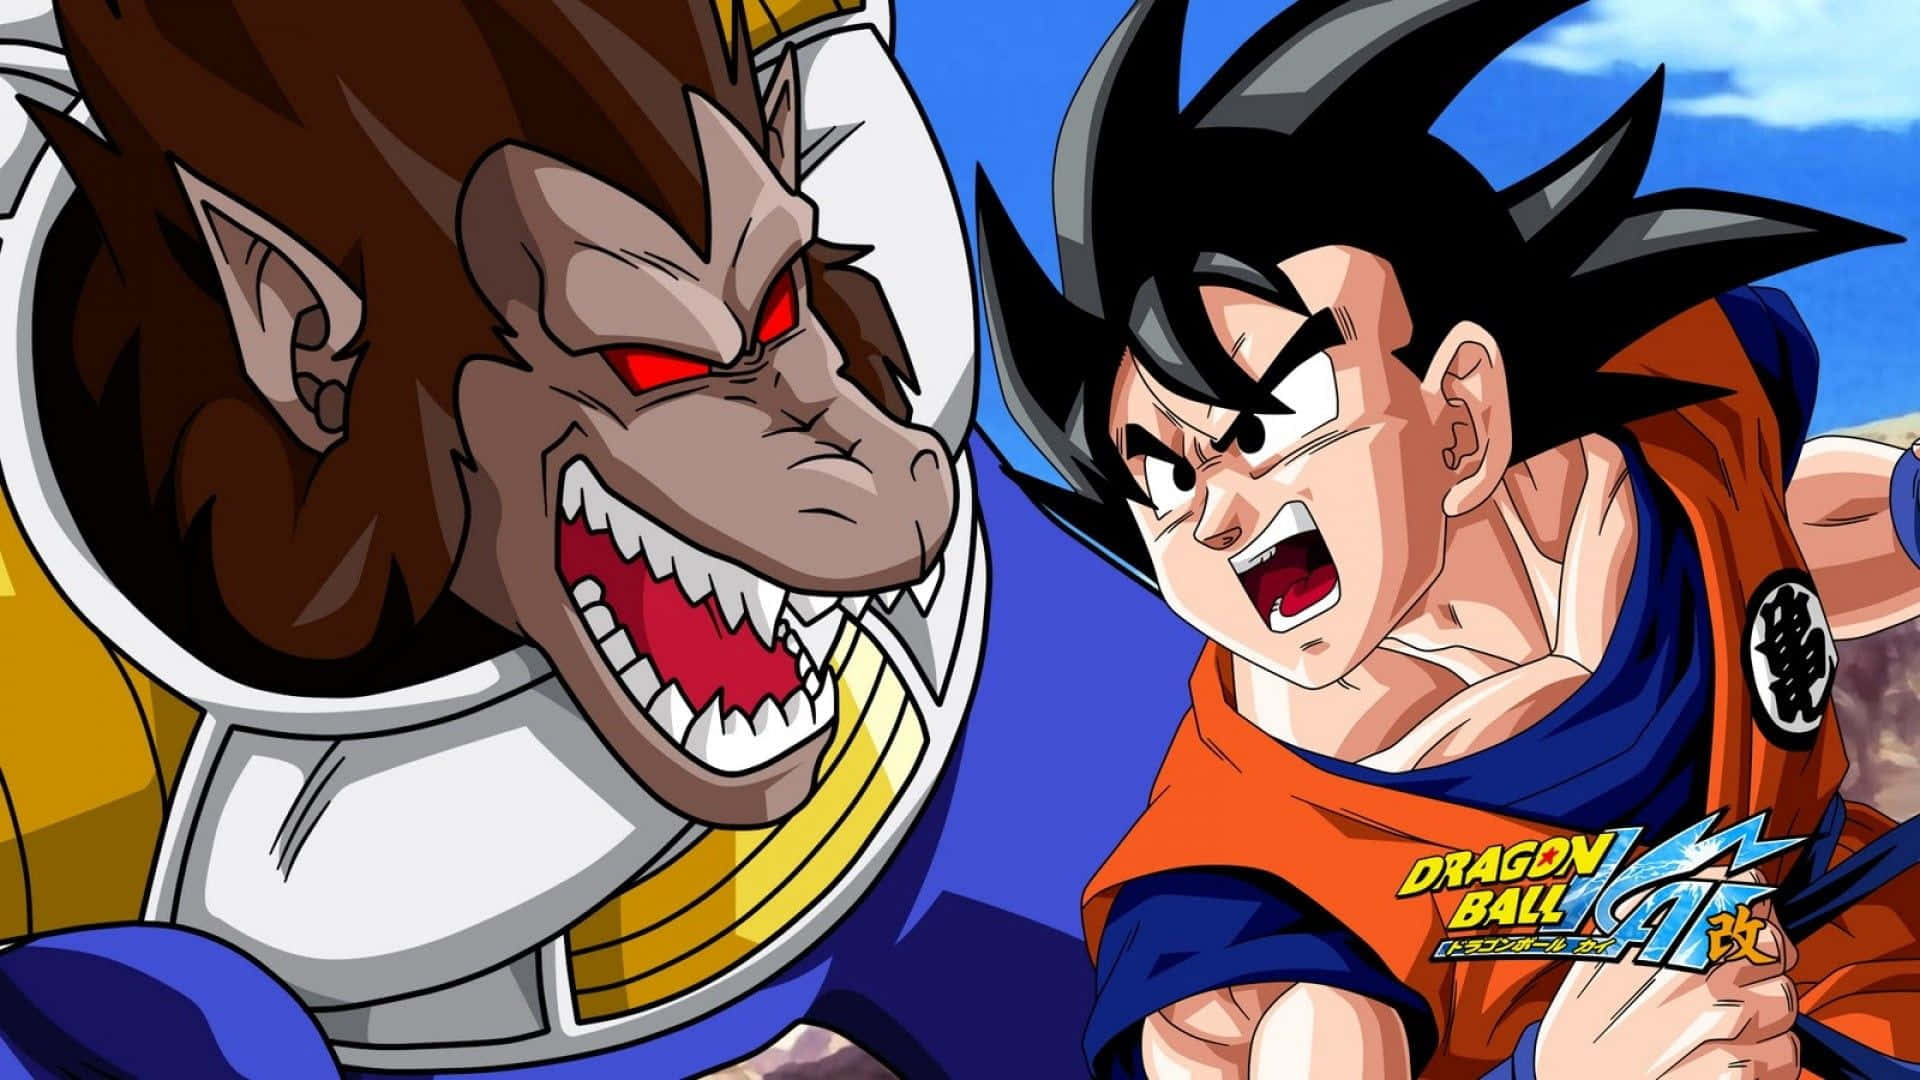 This fiery Dragon Ball Z Kai scene showcases the strength of Super Saiyan Goku. Wallpaper